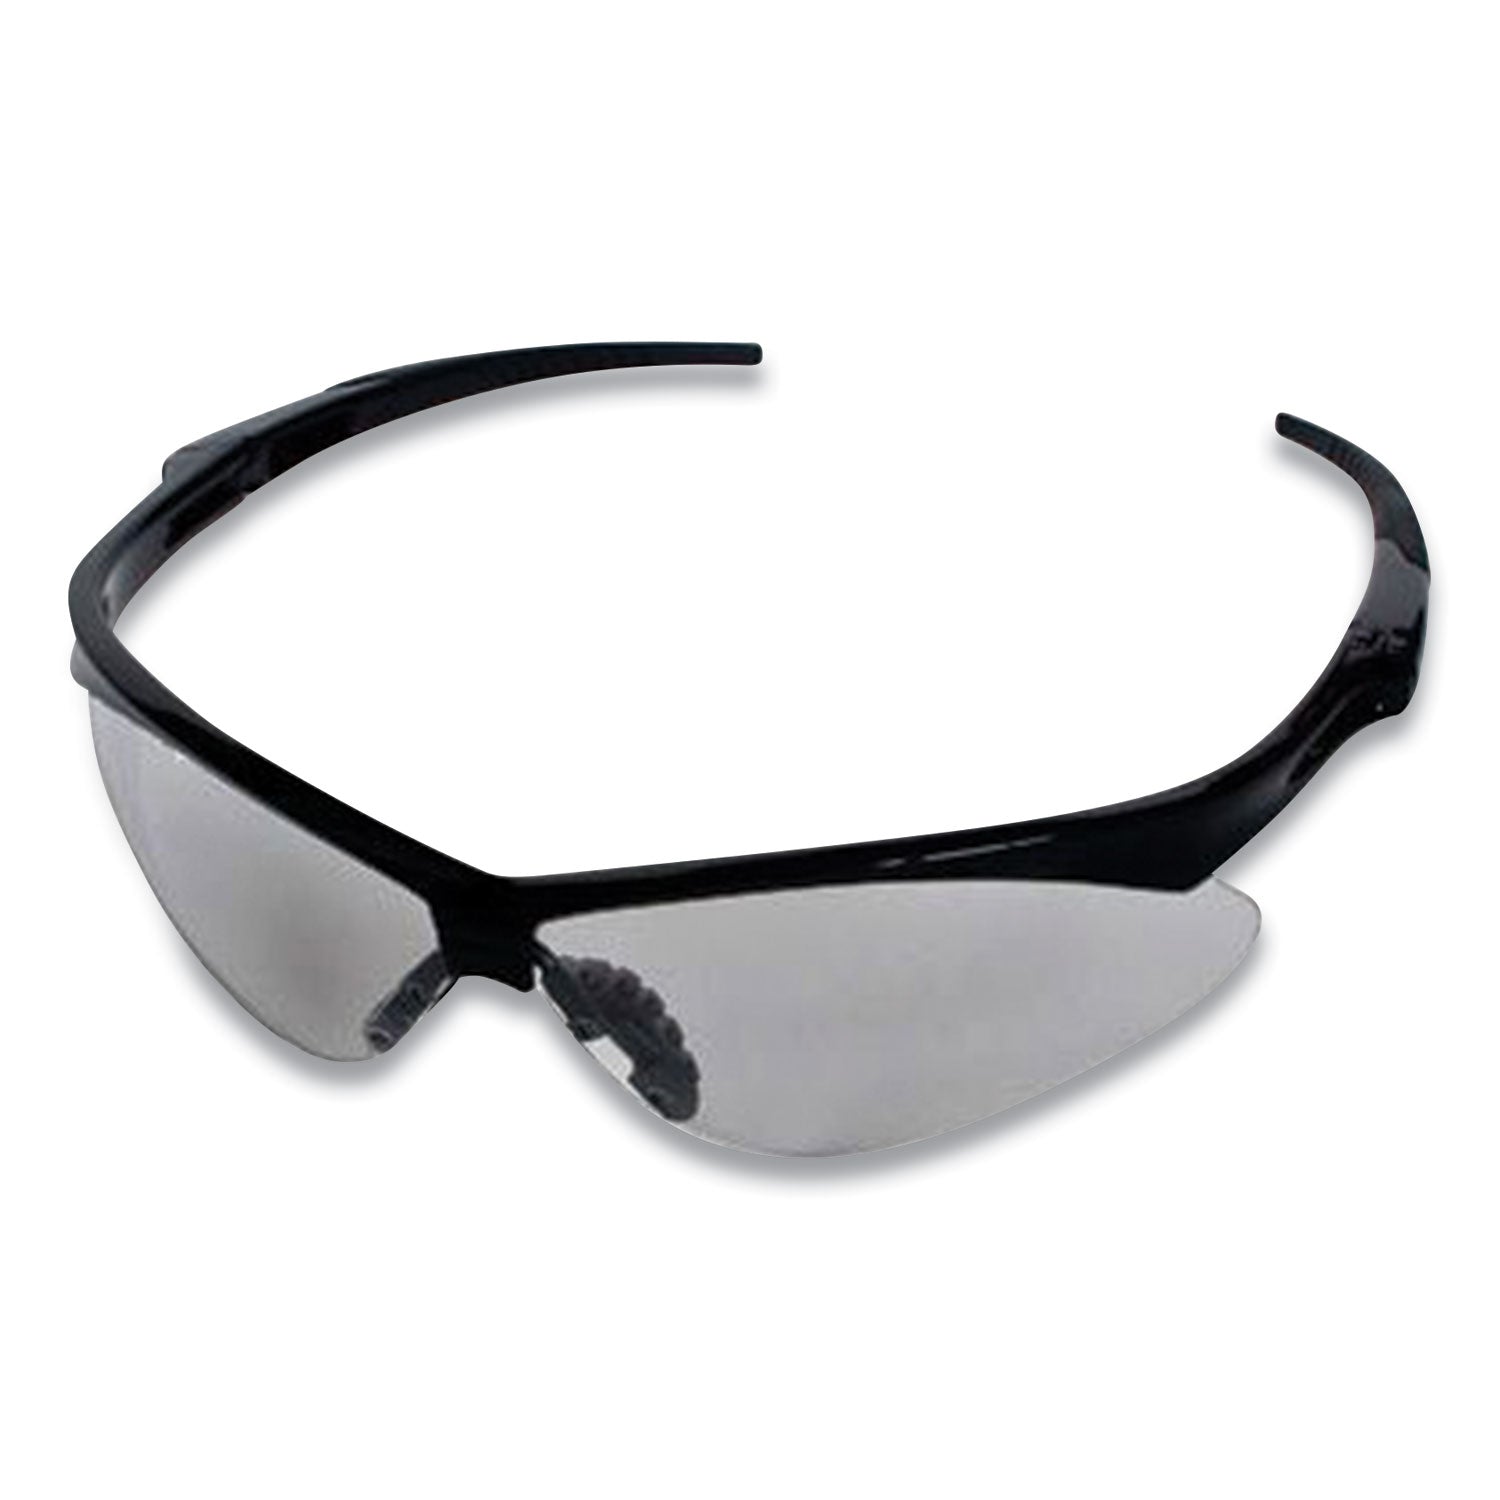 anser-optical-safety-glasses-scratch-resistant-clear-lens-black-frame_bou250an10114 - 2